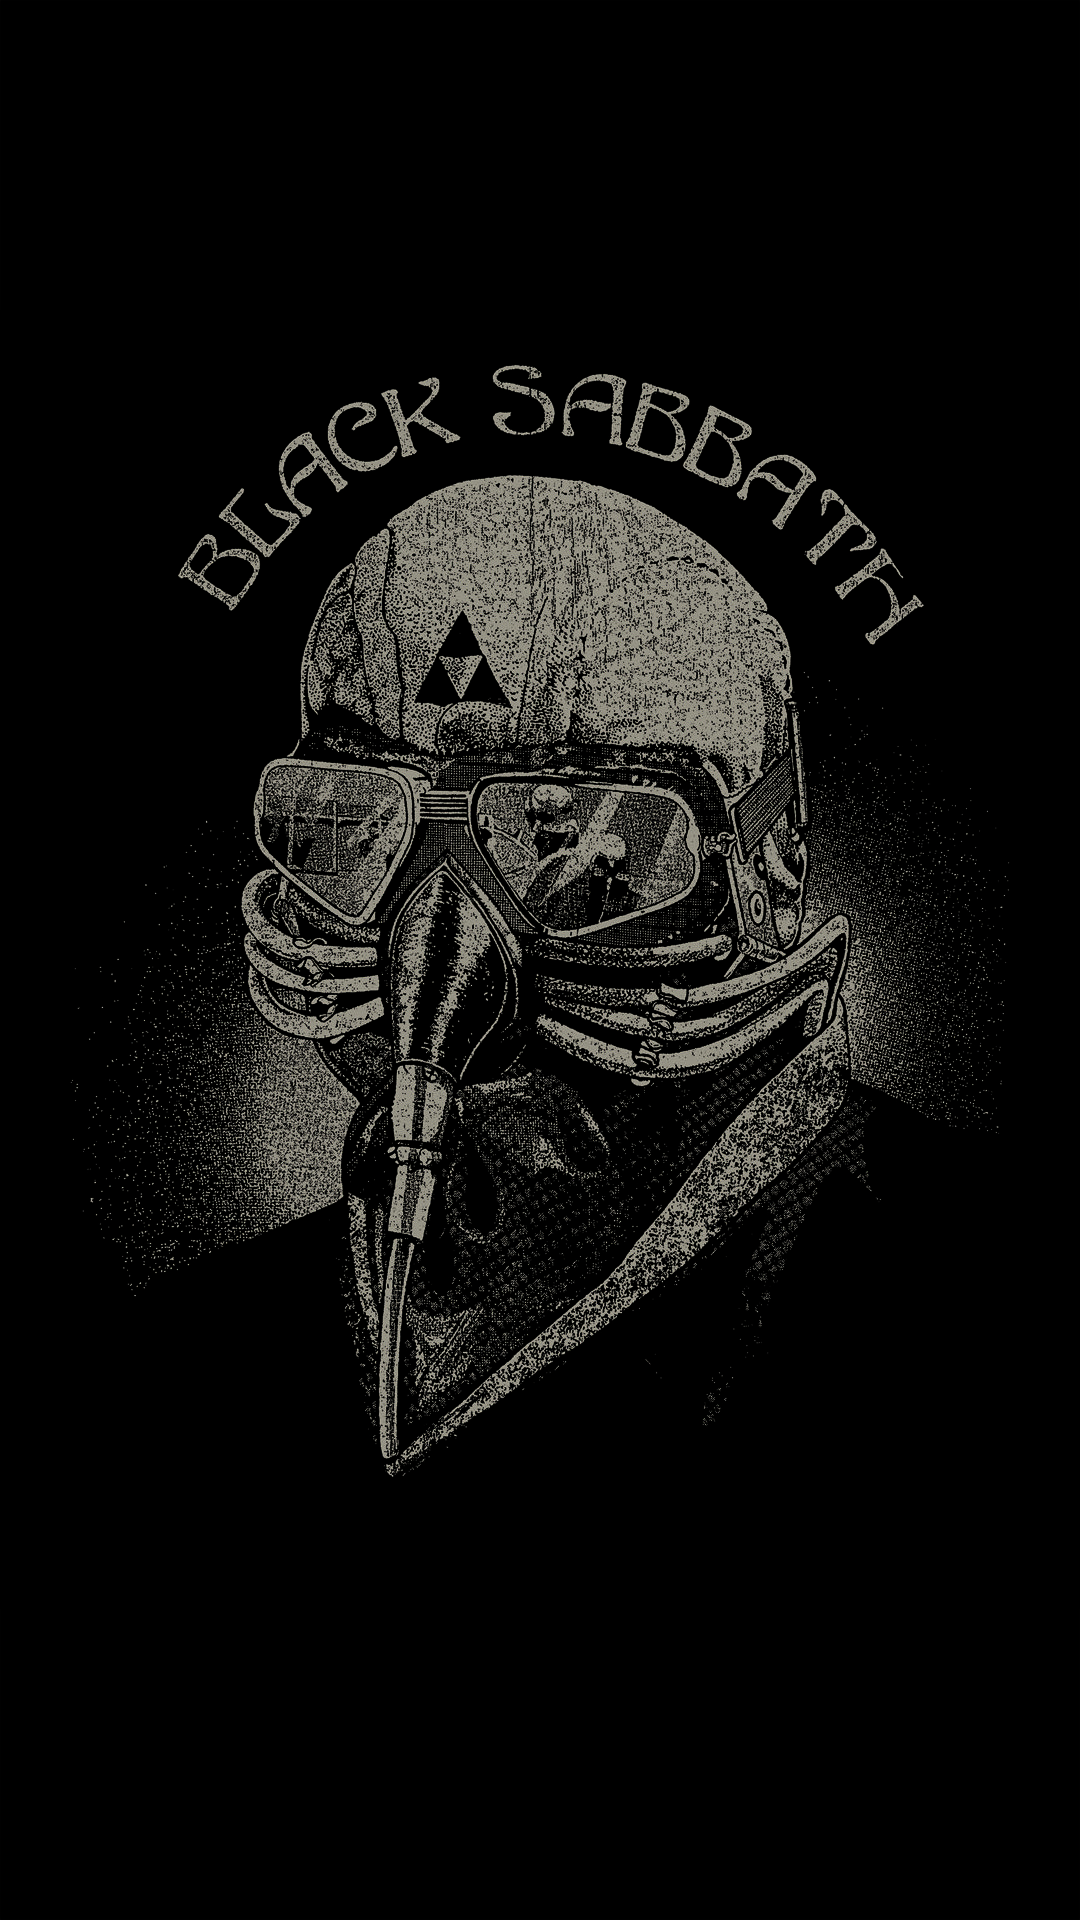 High Definition Collection: Black Sabbath Wallpaper, 40 Full HD